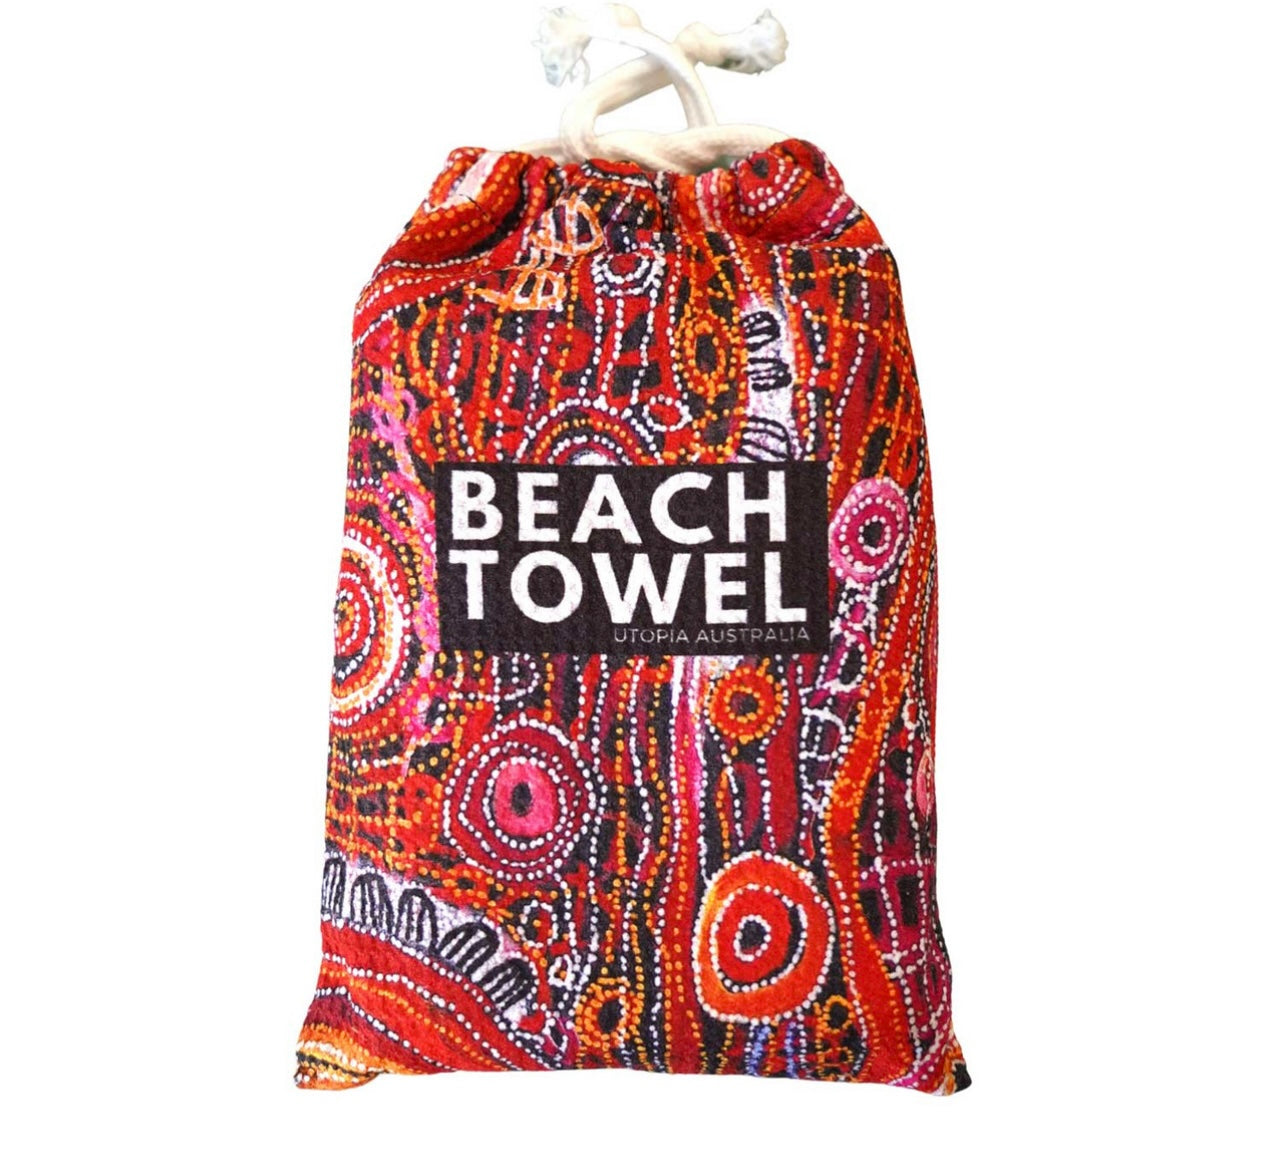 Beach Towel - Charmaine Pwerle